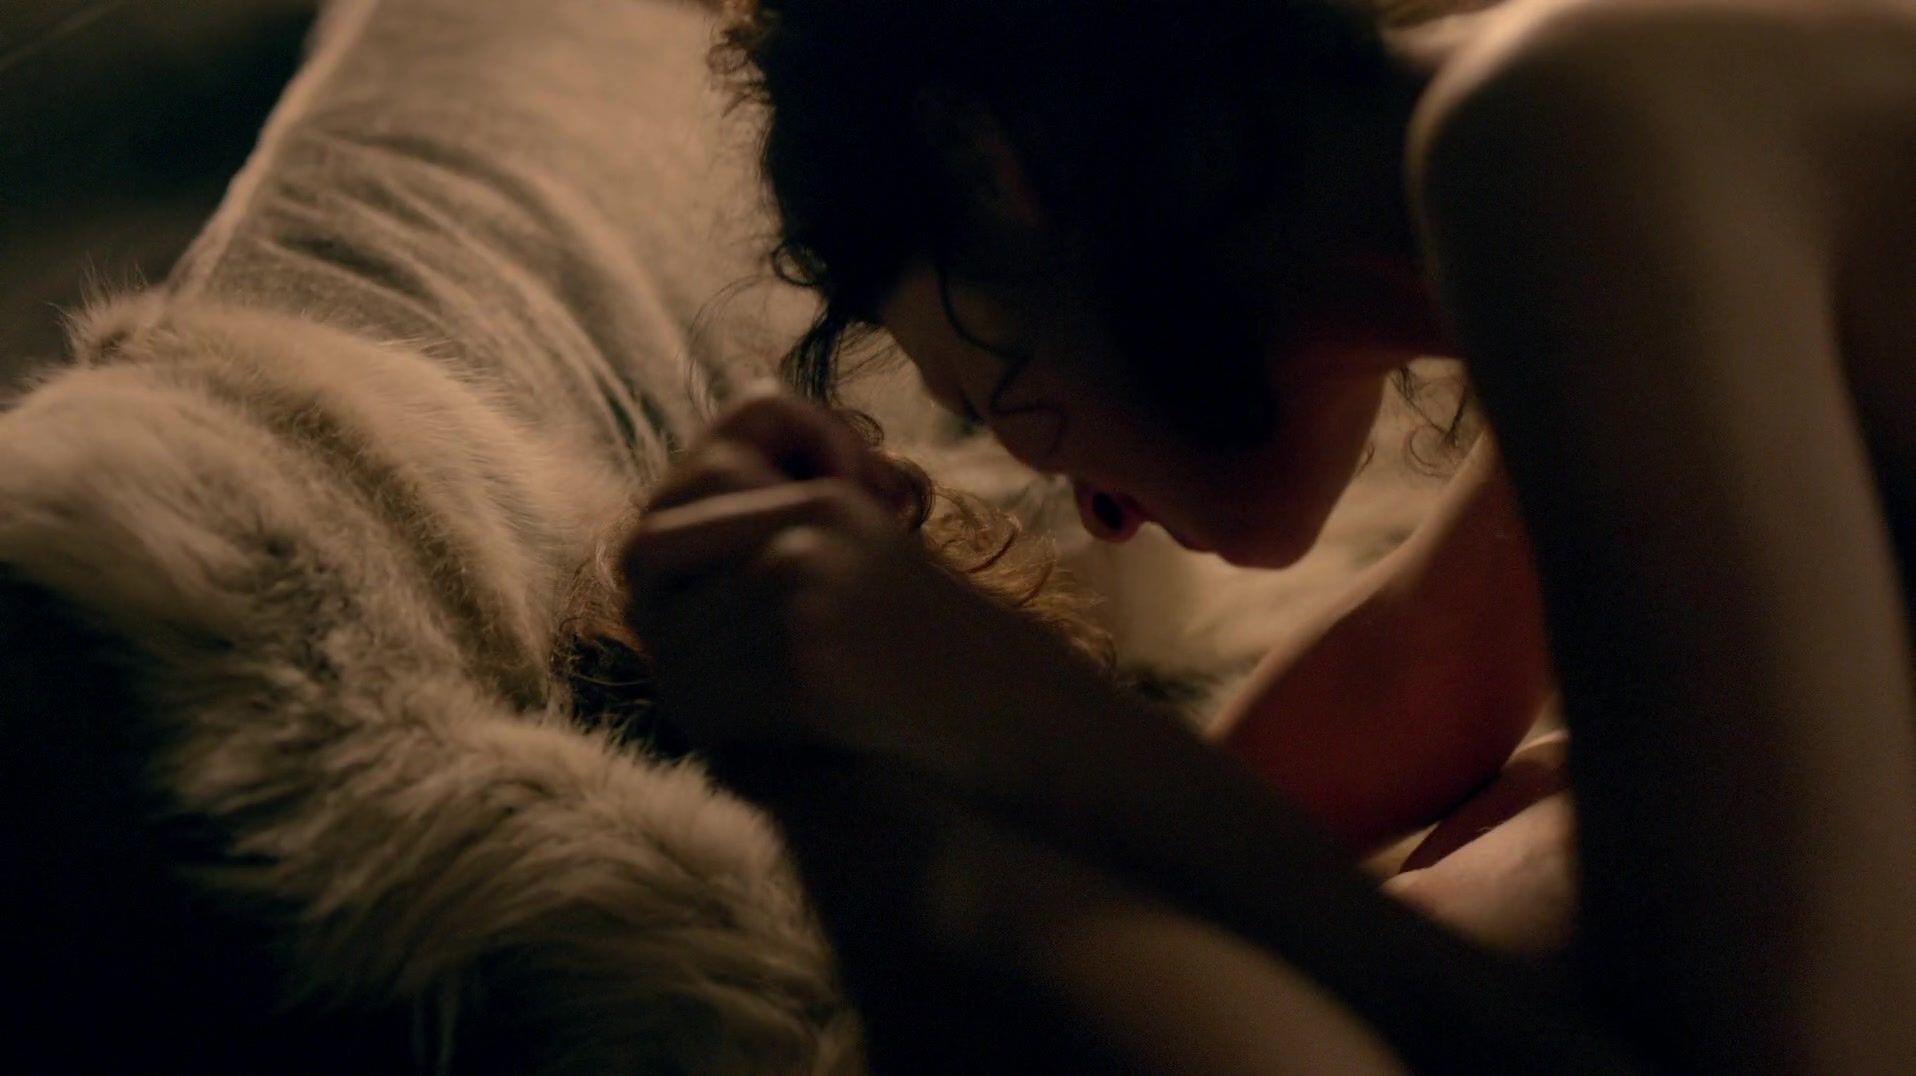 Double Penetration Sex scene of naked Caitriona Balfe | TV show "Outlander" Moaning